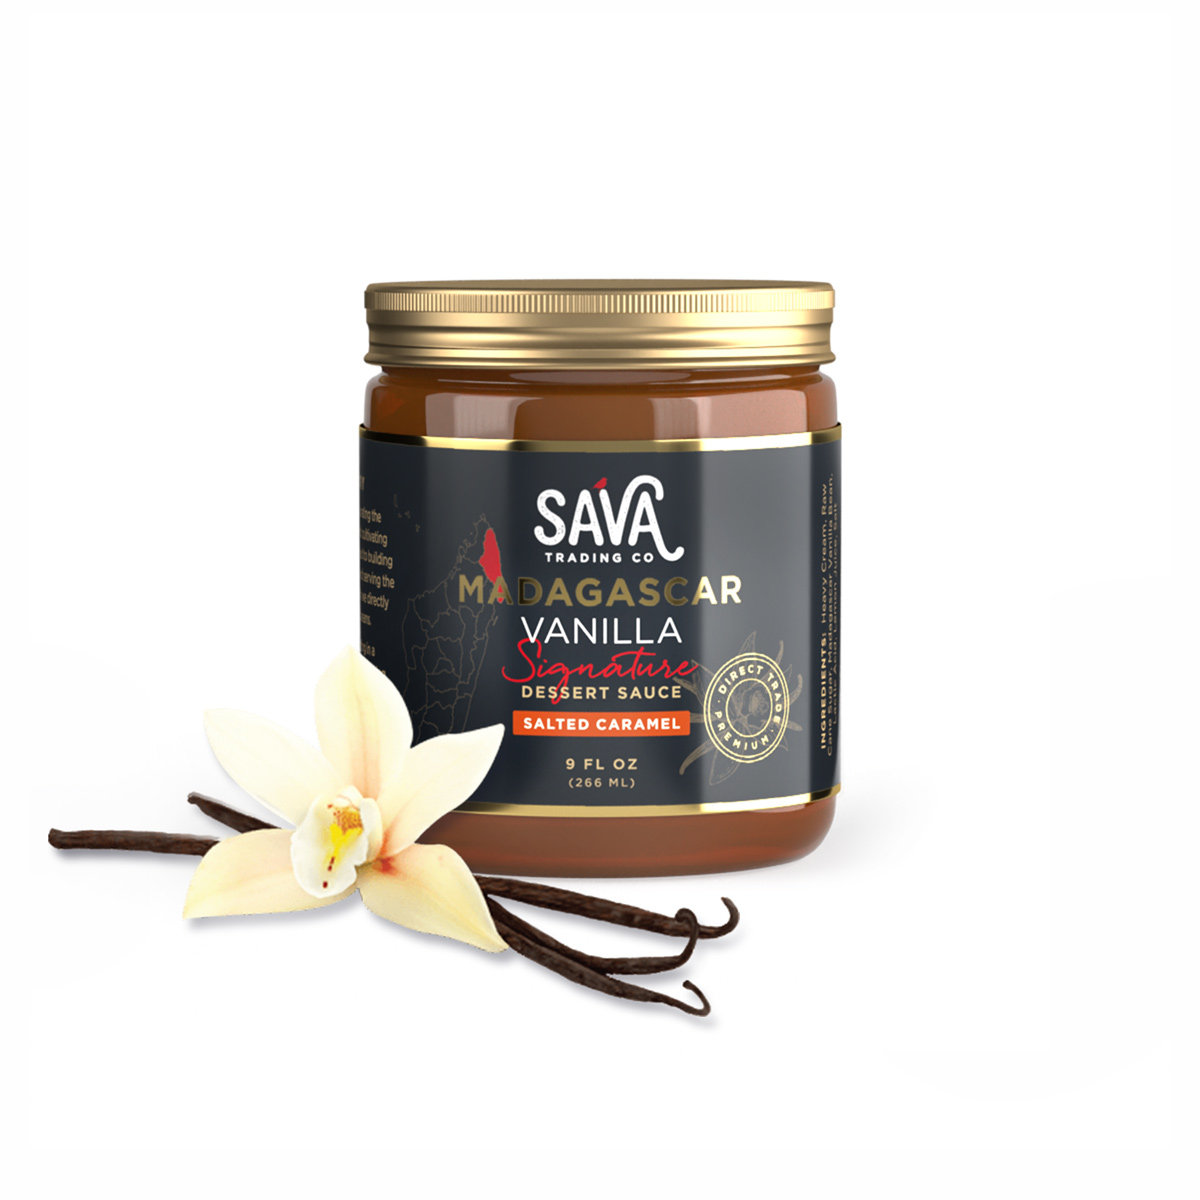 SAVA-Trading-Co-Madagascar-Vanilla-Caramel-Sauce-9oz